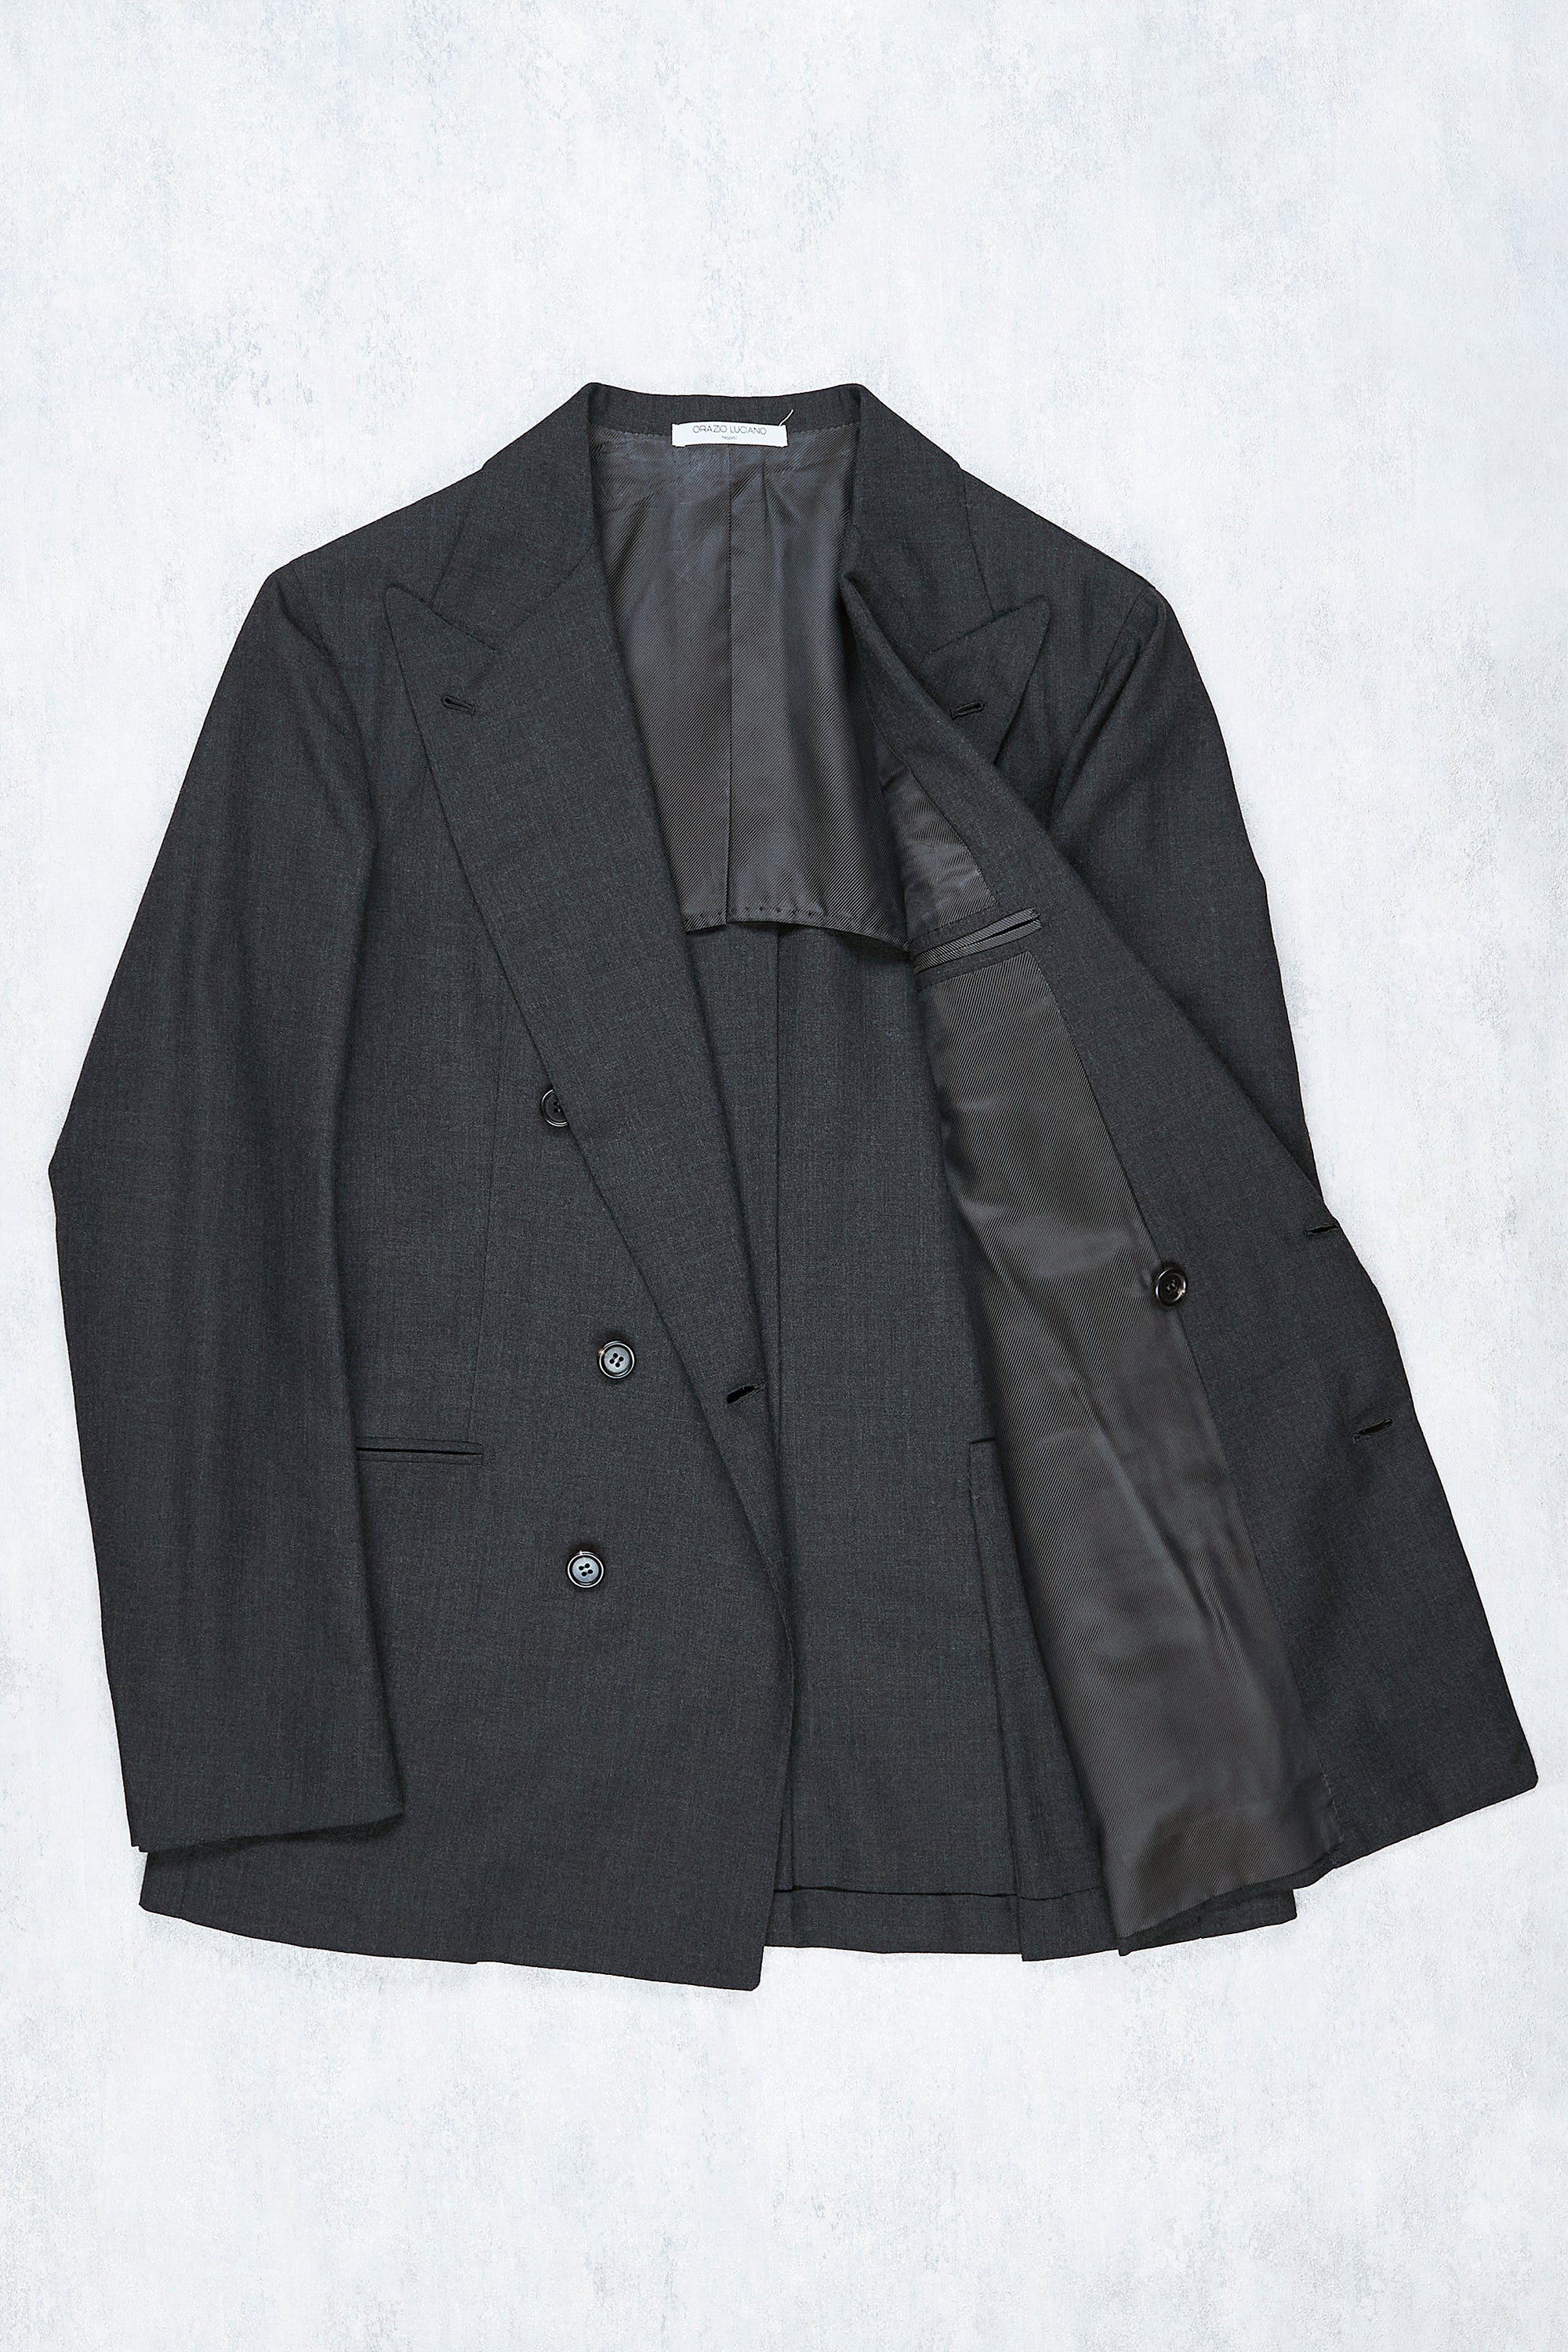 Orazio Luciano Dark Grey Worsted Wool DB Suit